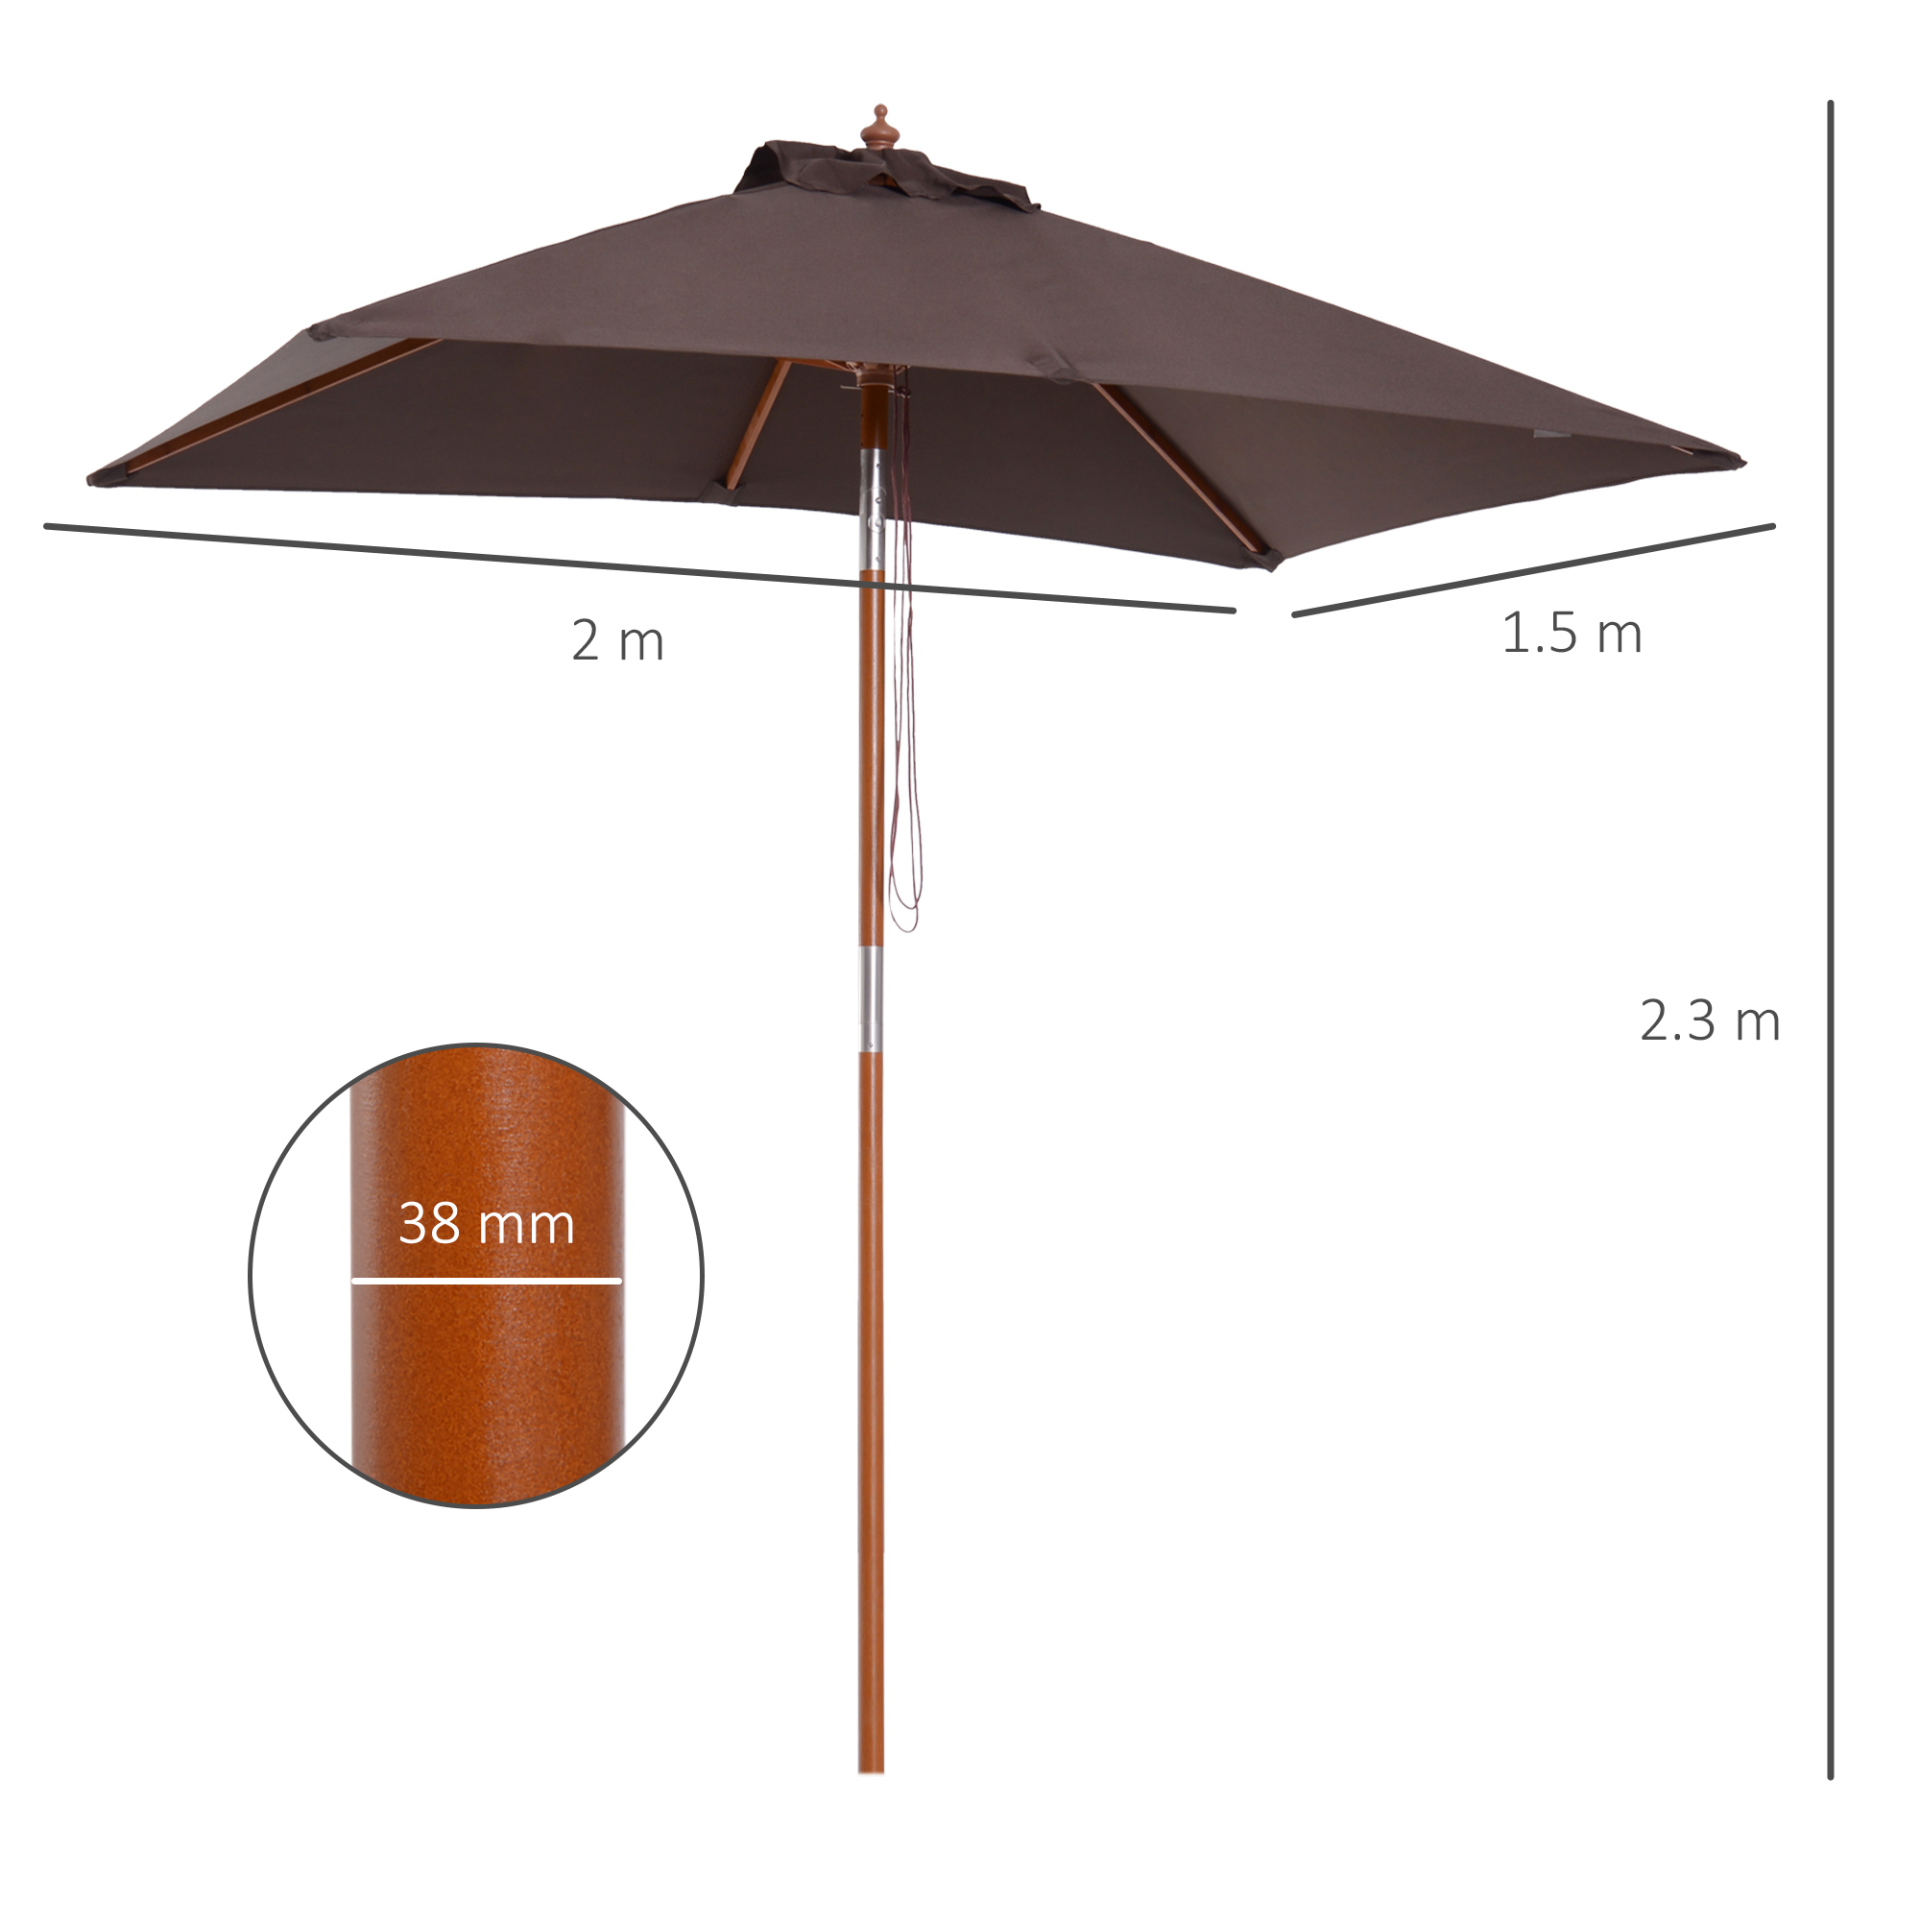 Outsunny 2m x 1.5m Patio Parasol Garden Umbrellas Sun Umbrella Bamboo Sunshade Canopy Outdoor Backyard Furniture Fir Wooden Pole 6 Ribs Tilt Mechanism - Coffee